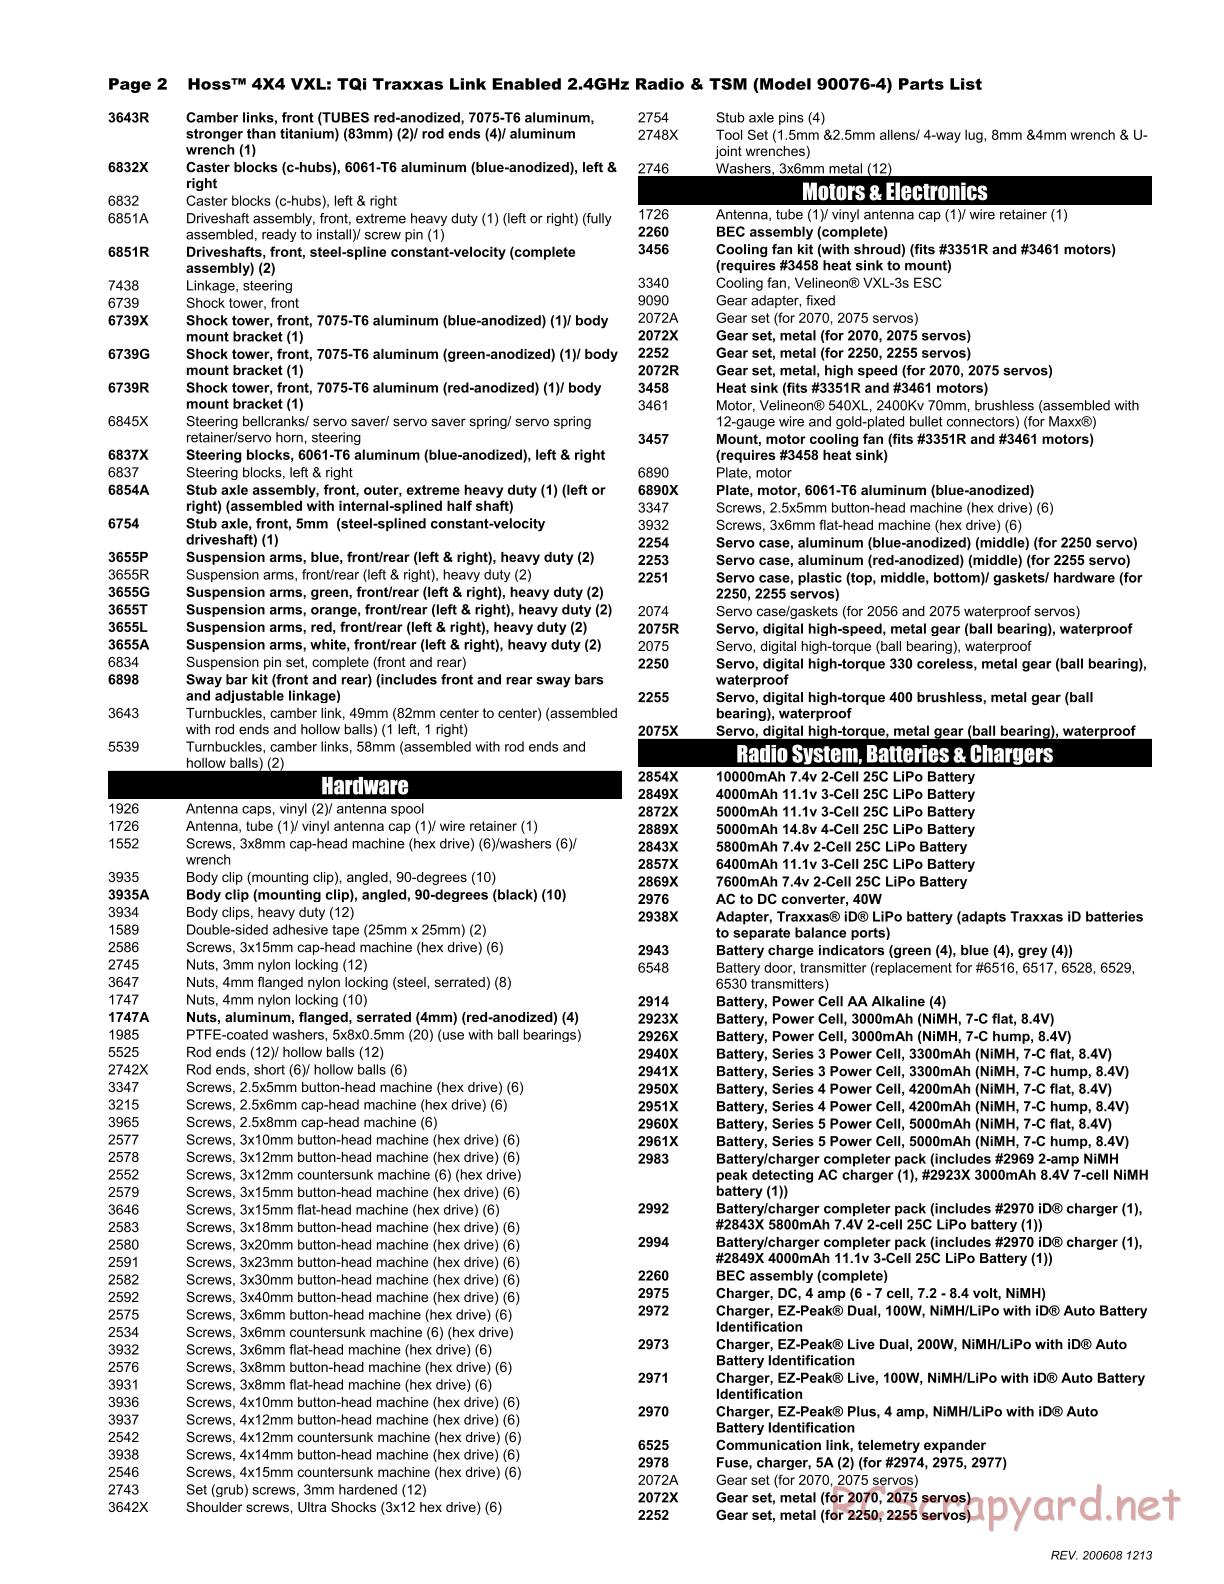 Traxxas - Hoss 4x4 VXL (2020) - Parts List - Page 2